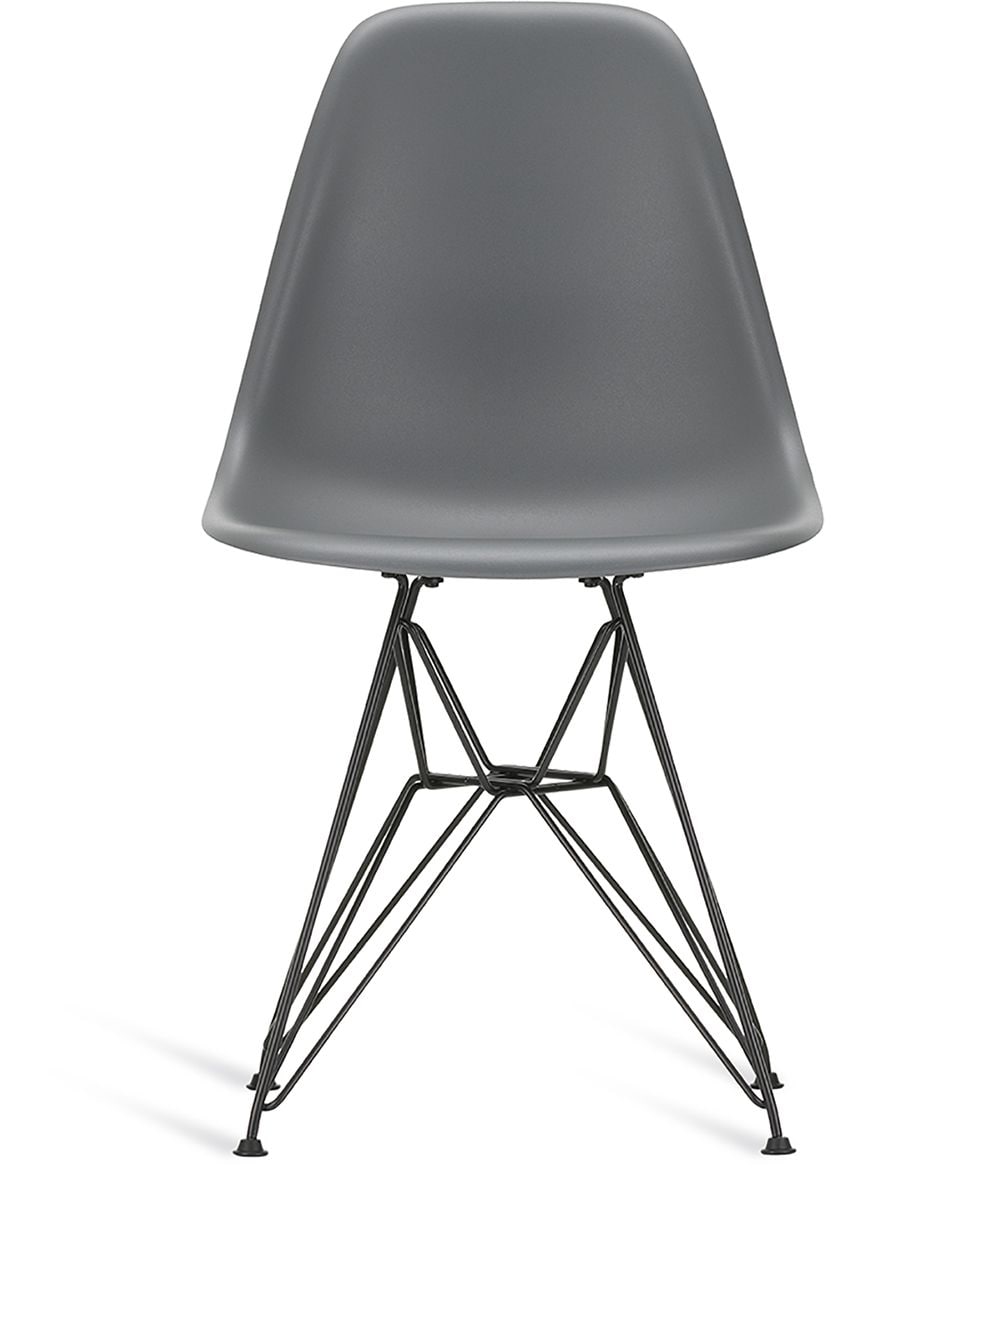 Vitra Eames Plastic Side Chair In Grau